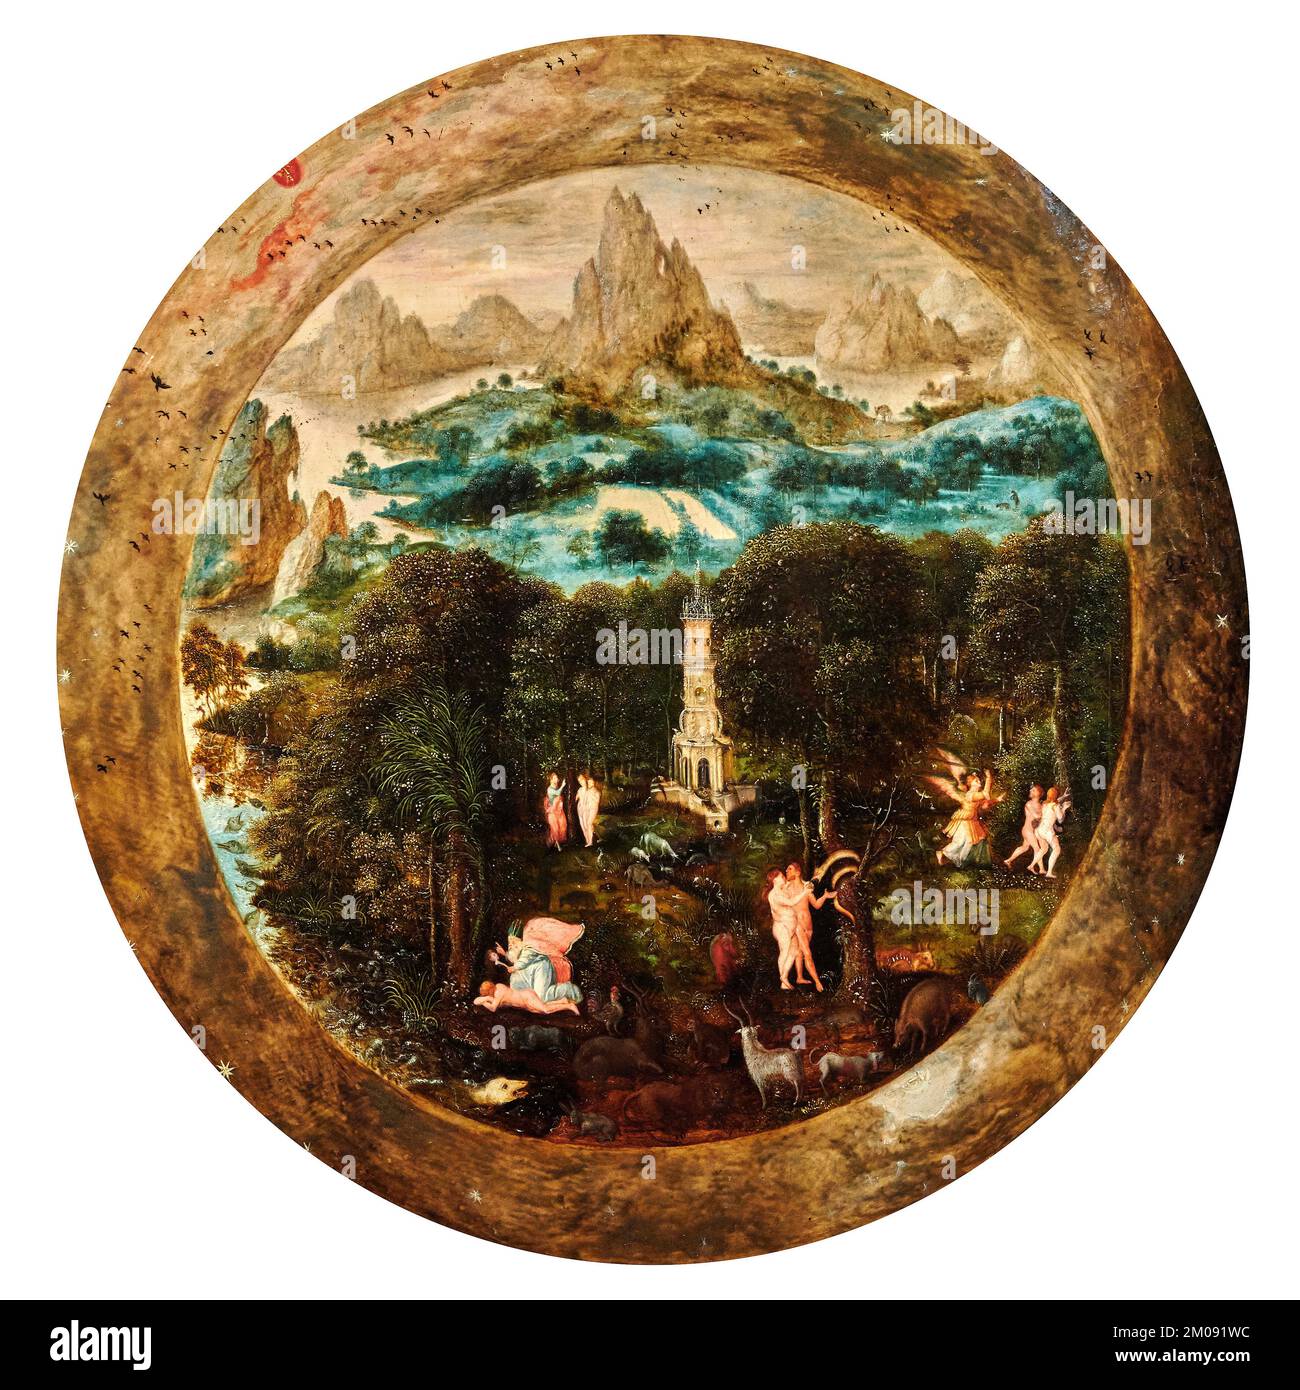 Paradiso terrestre  - olio su tavola  - Herri met de Bles detto il Civetta - 1550   - Amsterdam, Rijksmuseum Stock Photo